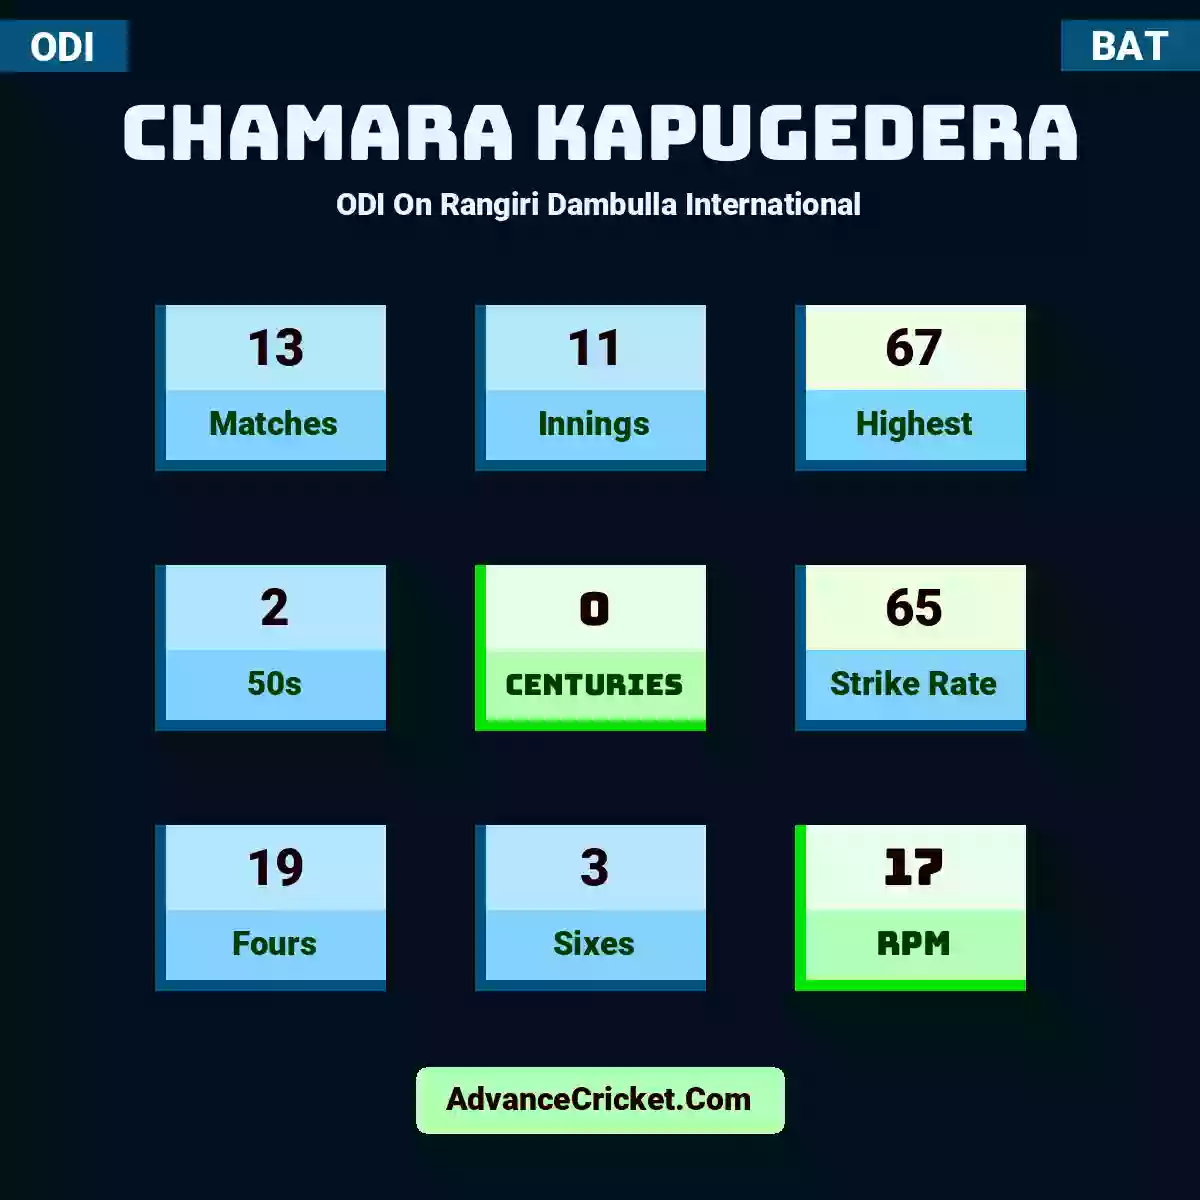 Chamara Kapugedera ODI  On Rangiri Dambulla International, Chamara Kapugedera played 13 matches, scored 67 runs as highest, 2 half-centuries, and 0 centuries, with a strike rate of 65. C.Kapugedera hit 19 fours and 3 sixes, with an RPM of 17.